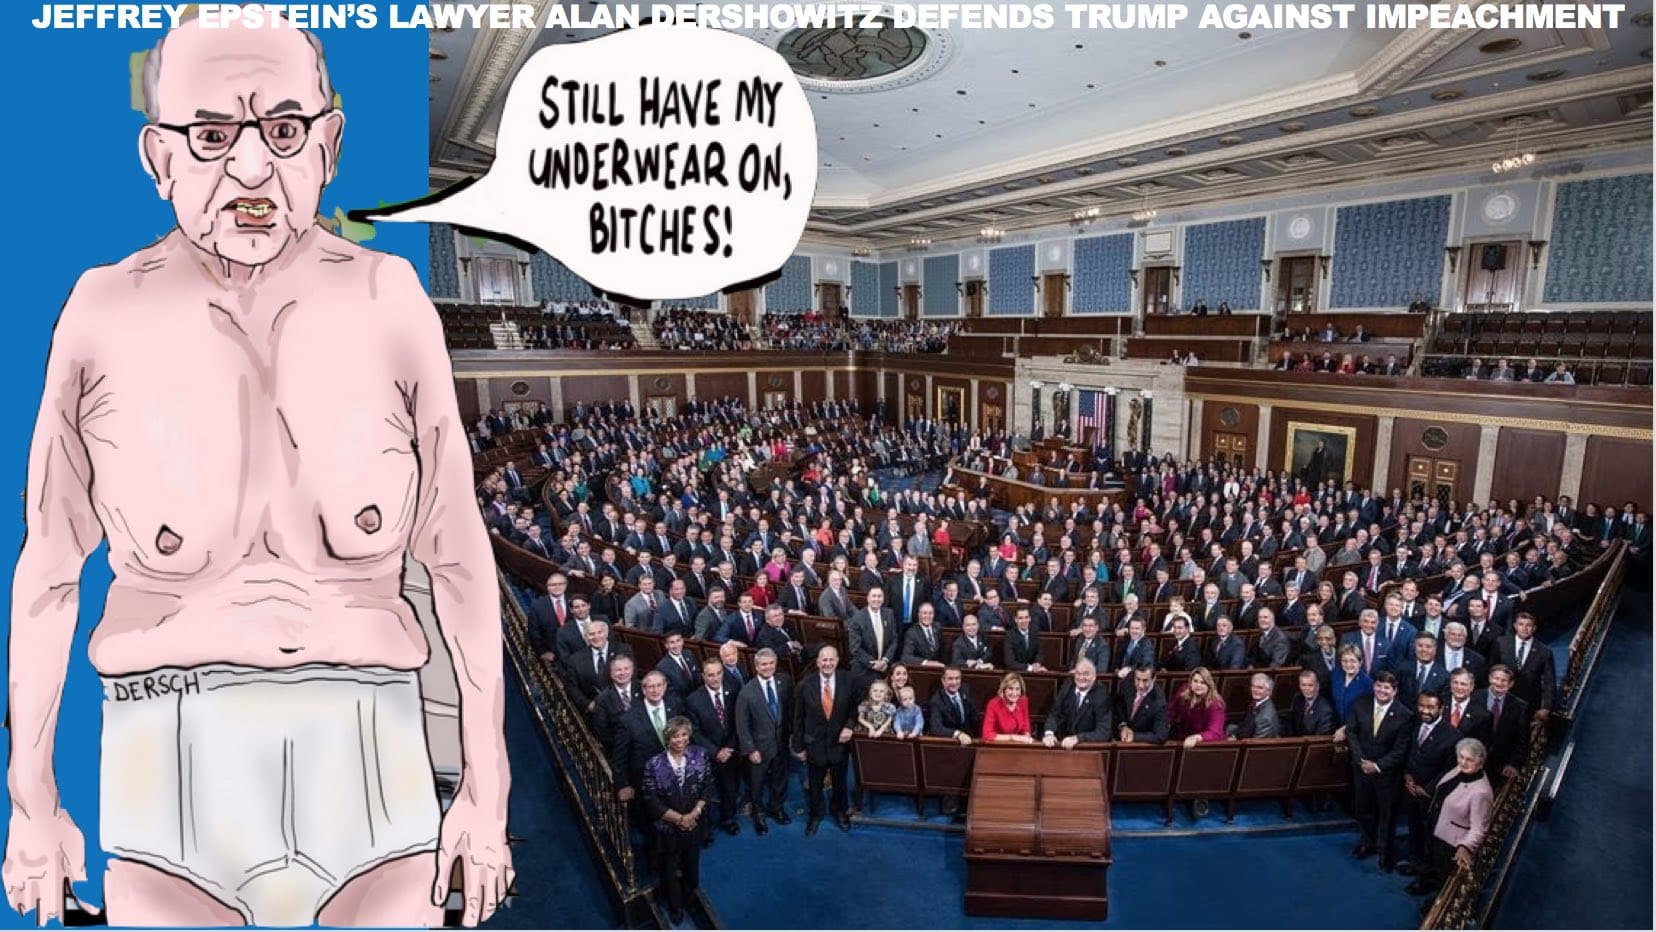 Alan Dershowitz to Senators: “Keep Your Underwear on and Acquit Trump—OR ELSE ...1656 x 932